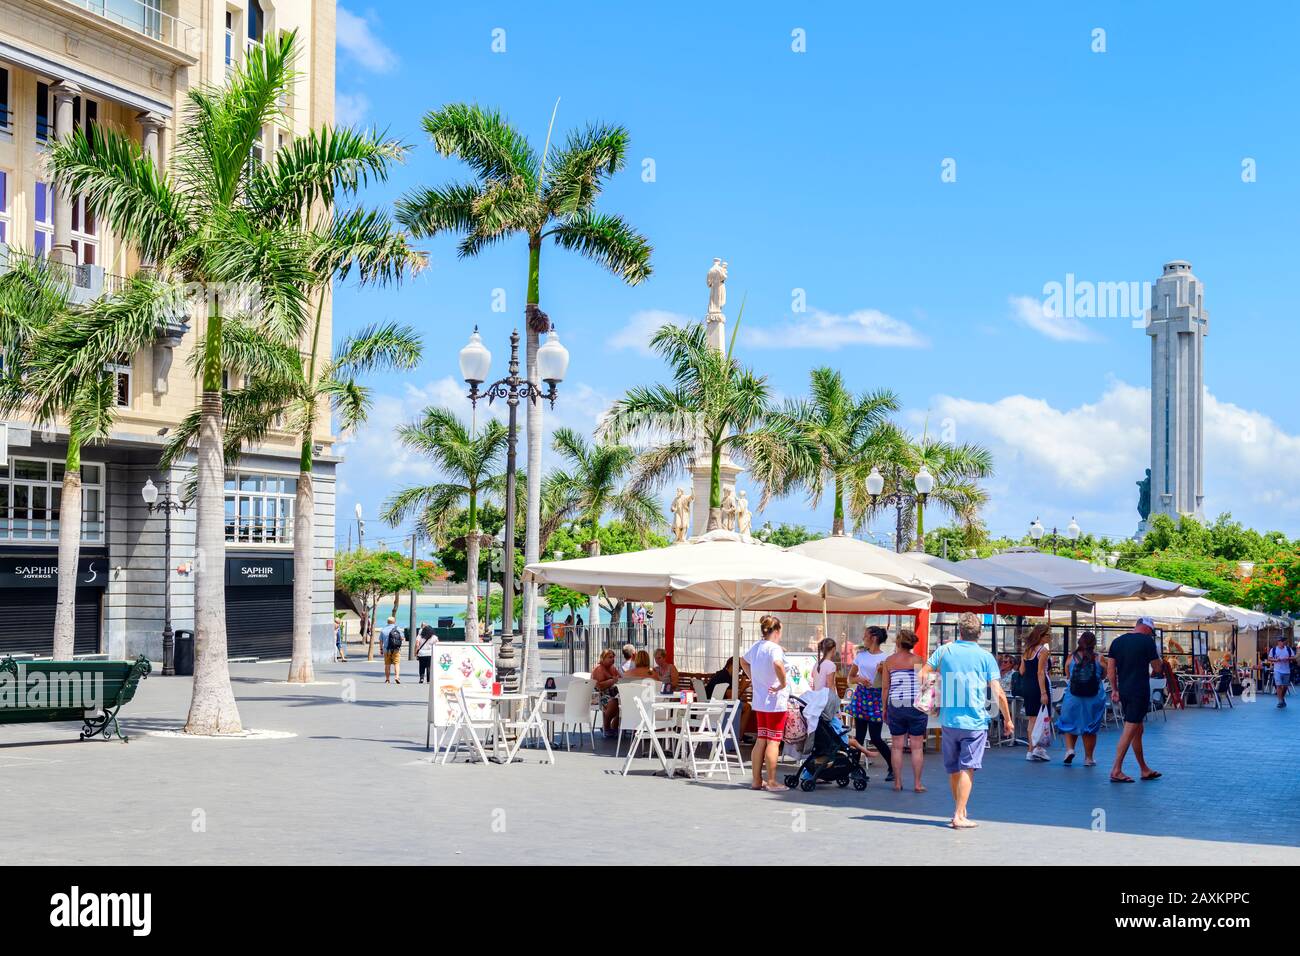 Straßencafé an der Plaza de la Candelaria, Santa Cruz, Teneriffa, Kanarische Inseln. Stockfoto